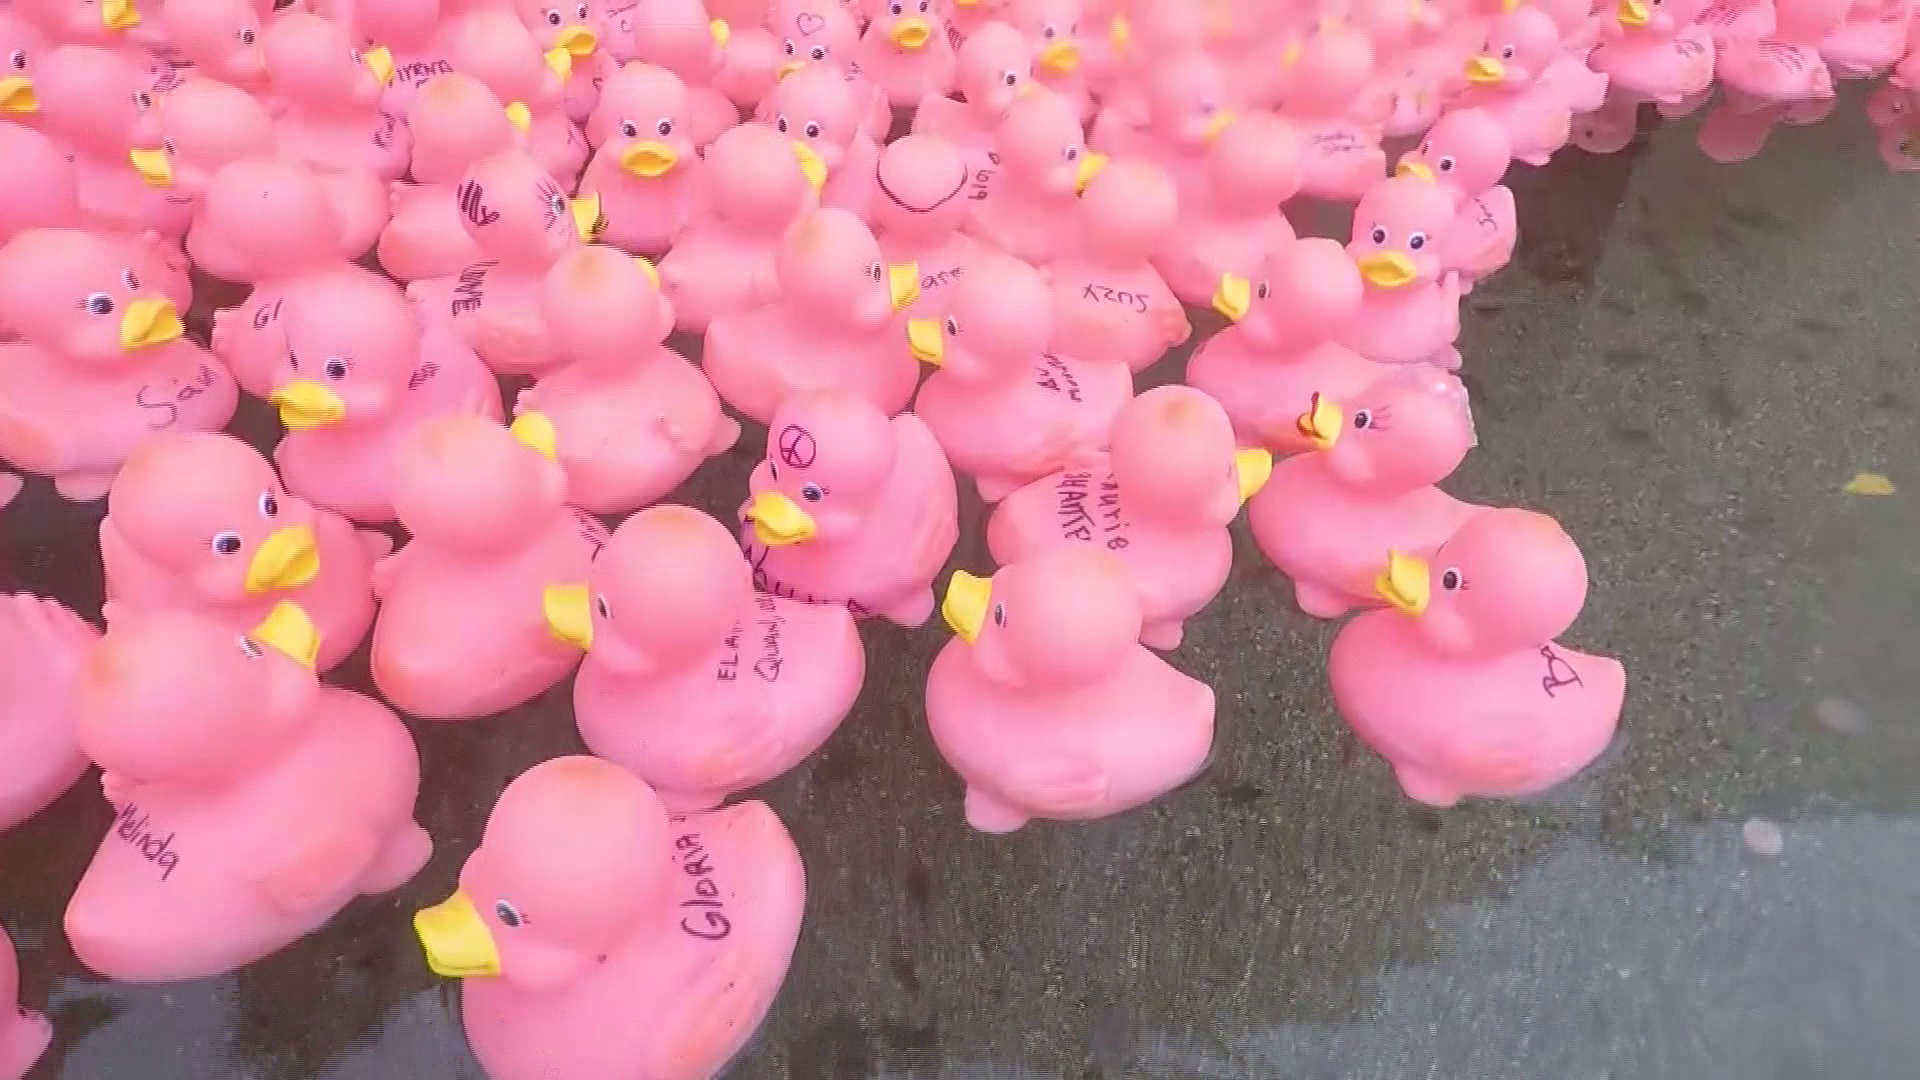 Pink Ducks raise bucks for breast cancer fund